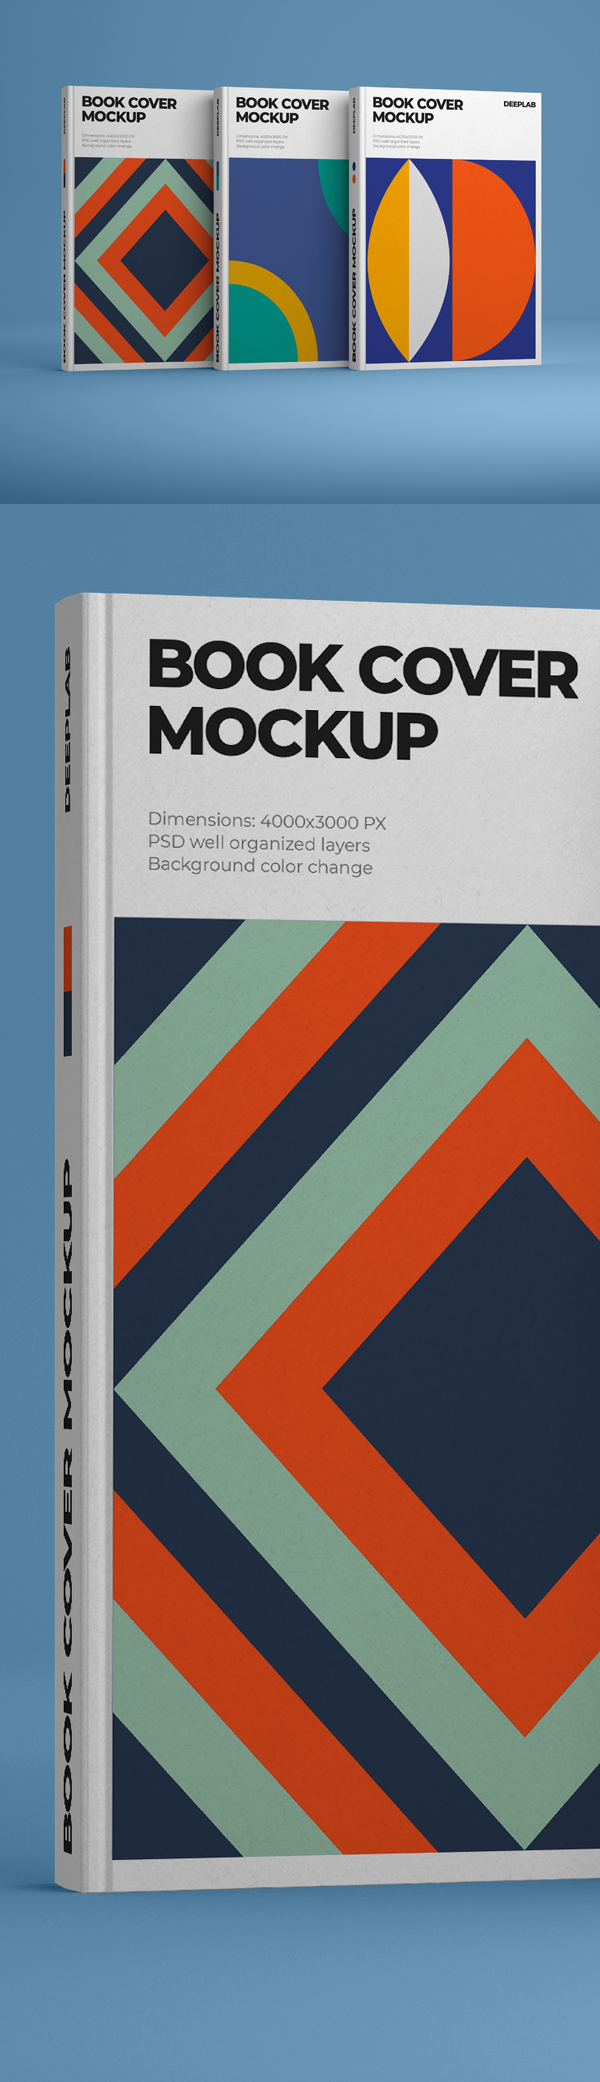 Free Hardcover Vertical Books Mockup PSD